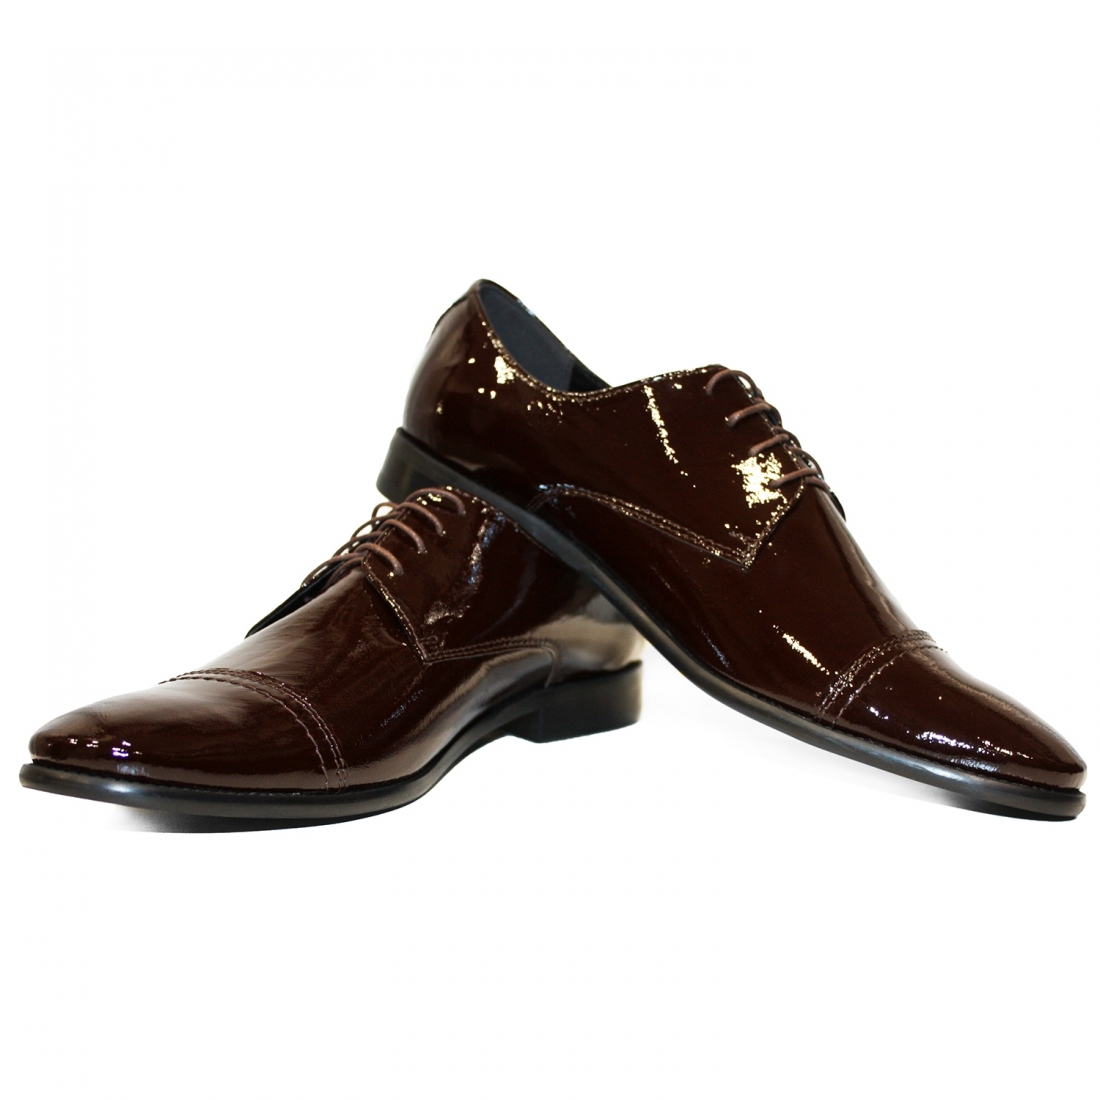 Modello Virello - Classic Shoes - Handmade Colorful Italian Leather Shoes